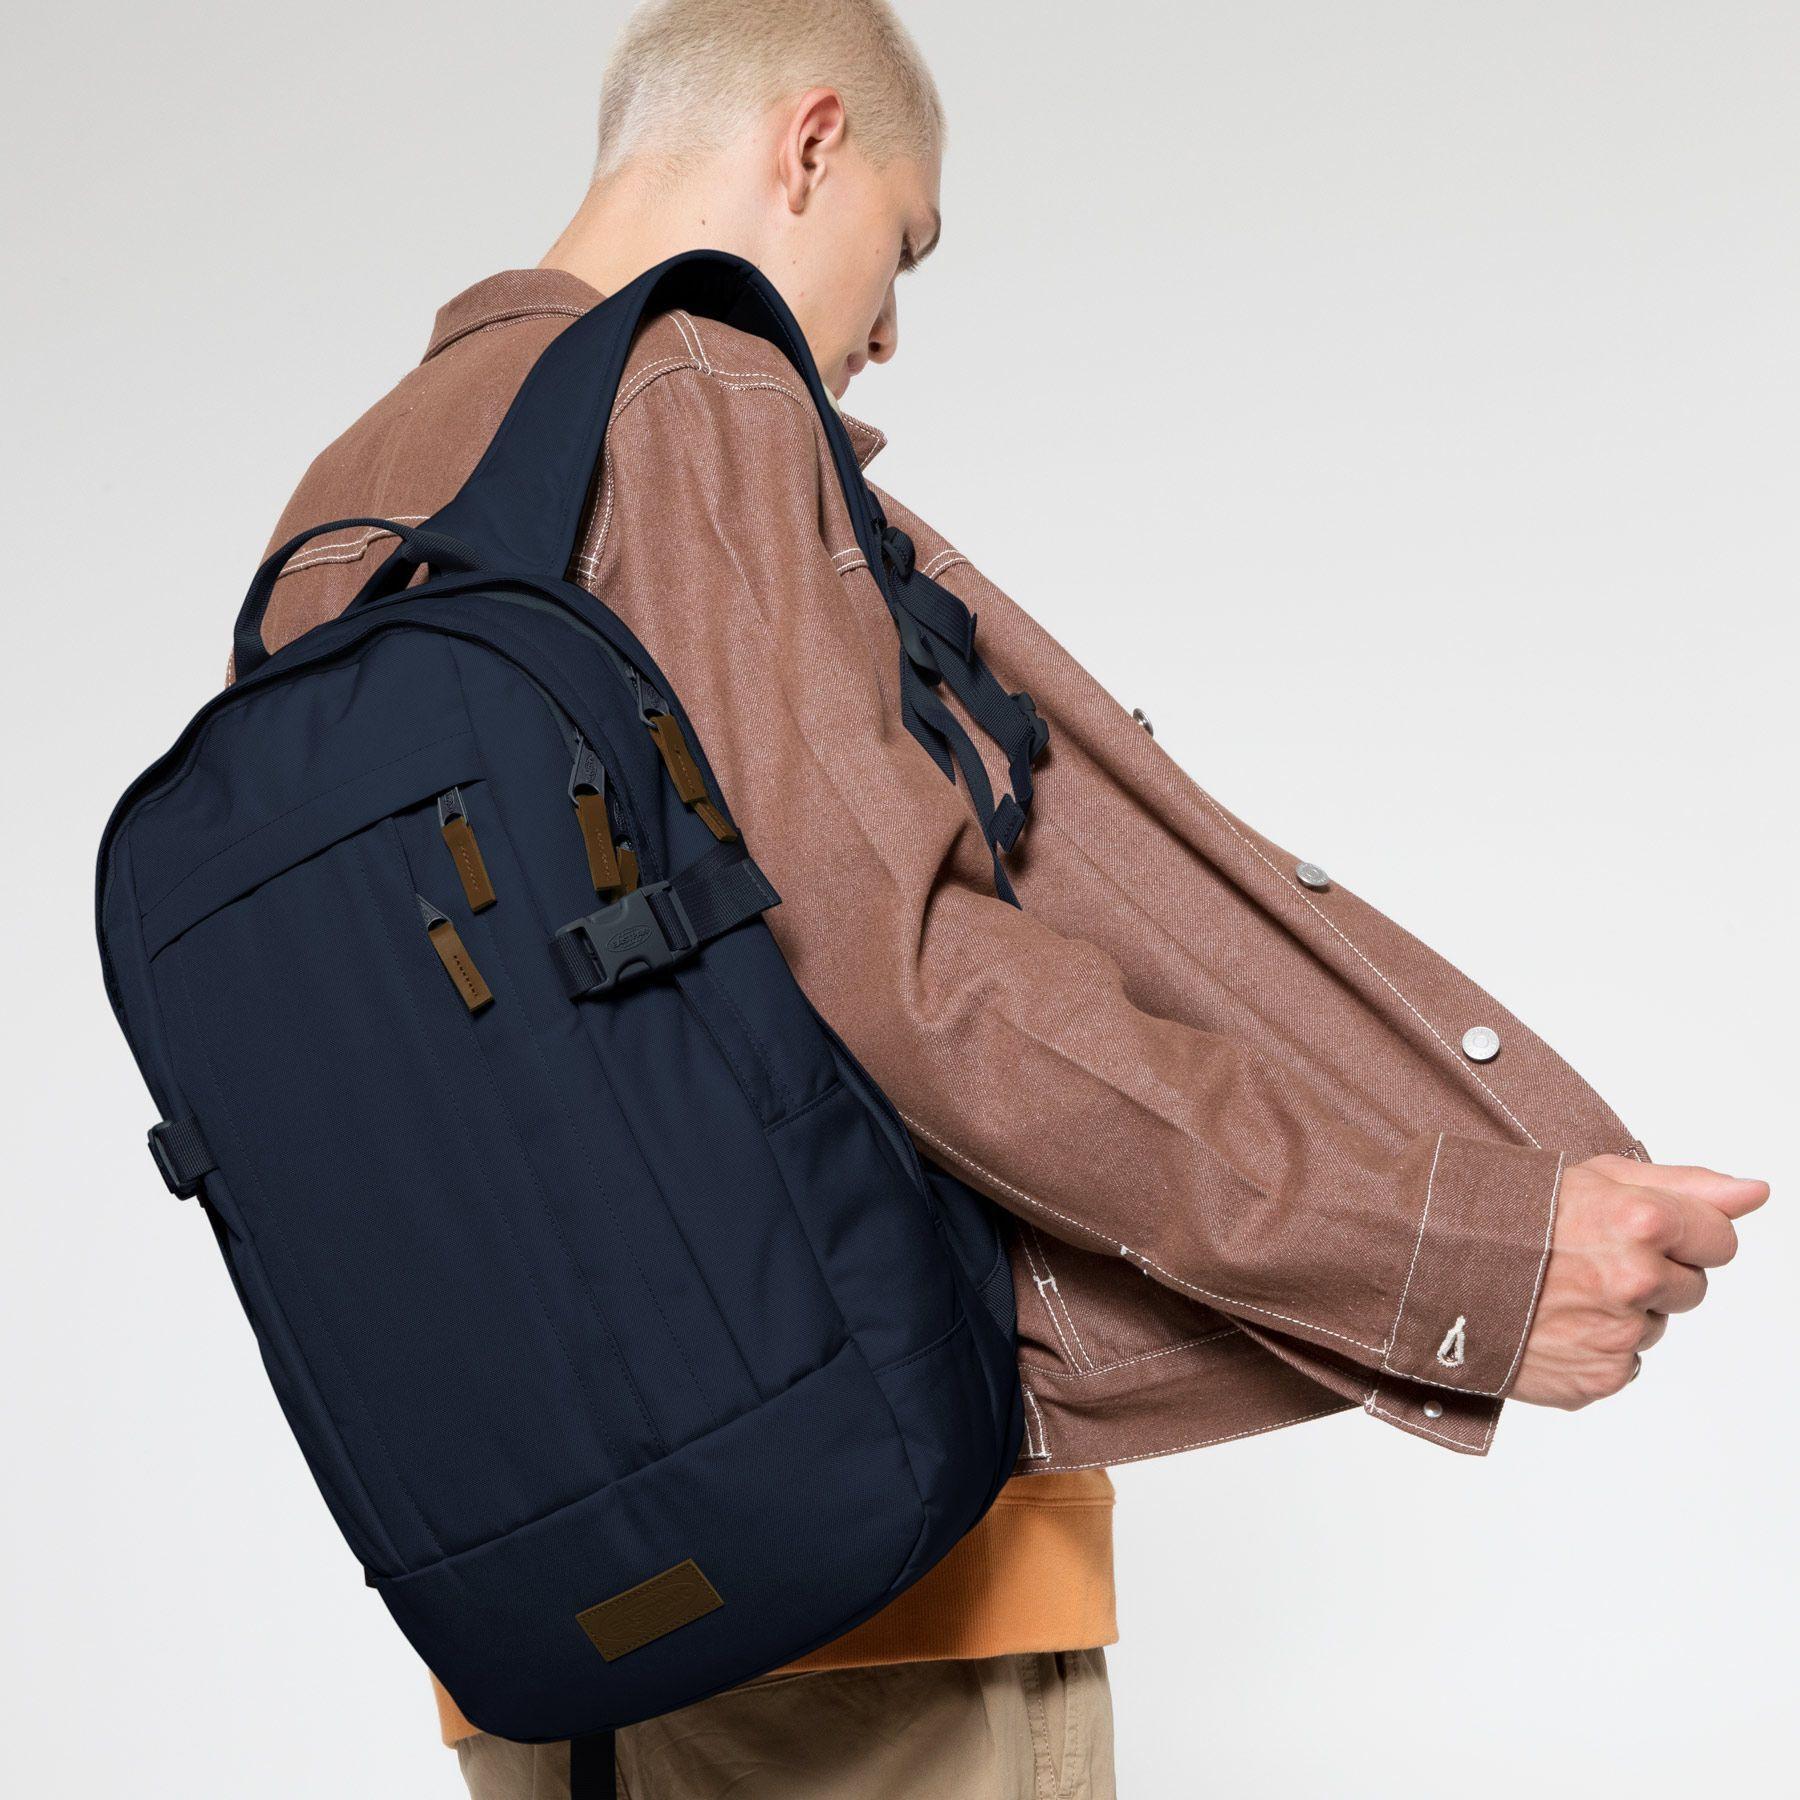 Backpack Eastpak Extrafloid